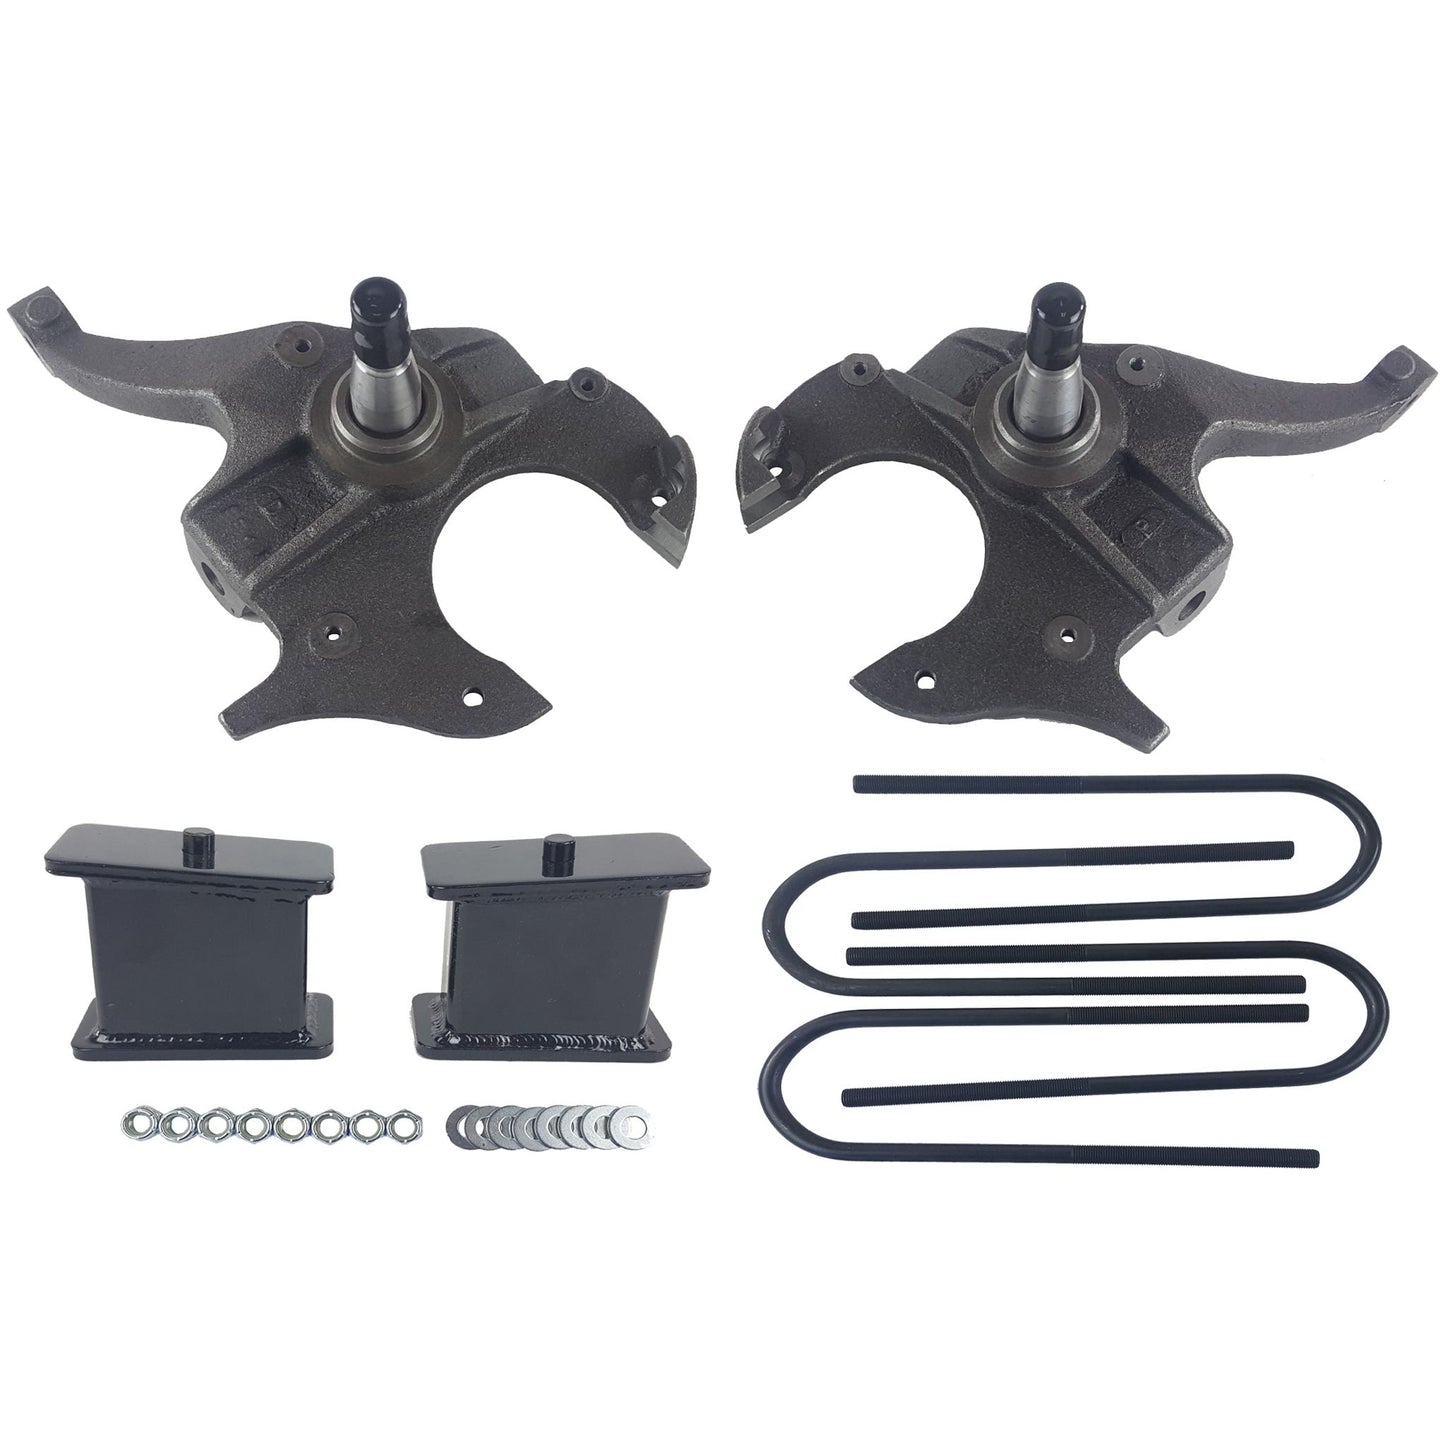 slamrite Drop Spindles & Fabricated Steel Blocks Kit Fits S10 2wd